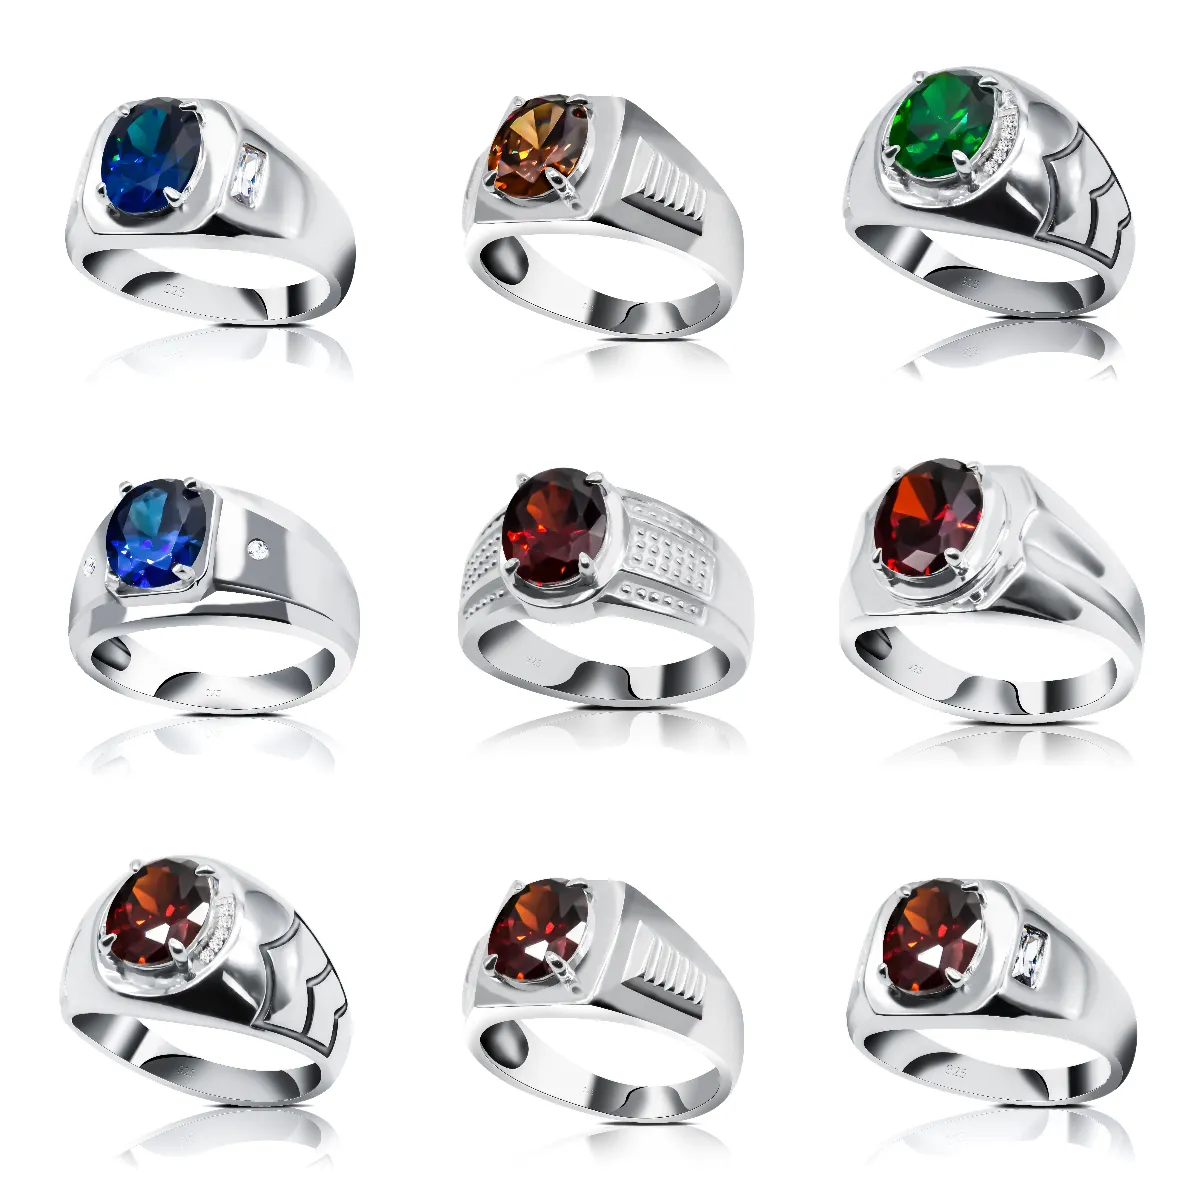 Ashion-anillos de plata de ley 925 para hombre, joyería de boda con piedras de circonita cúbica multicolor, para regalo